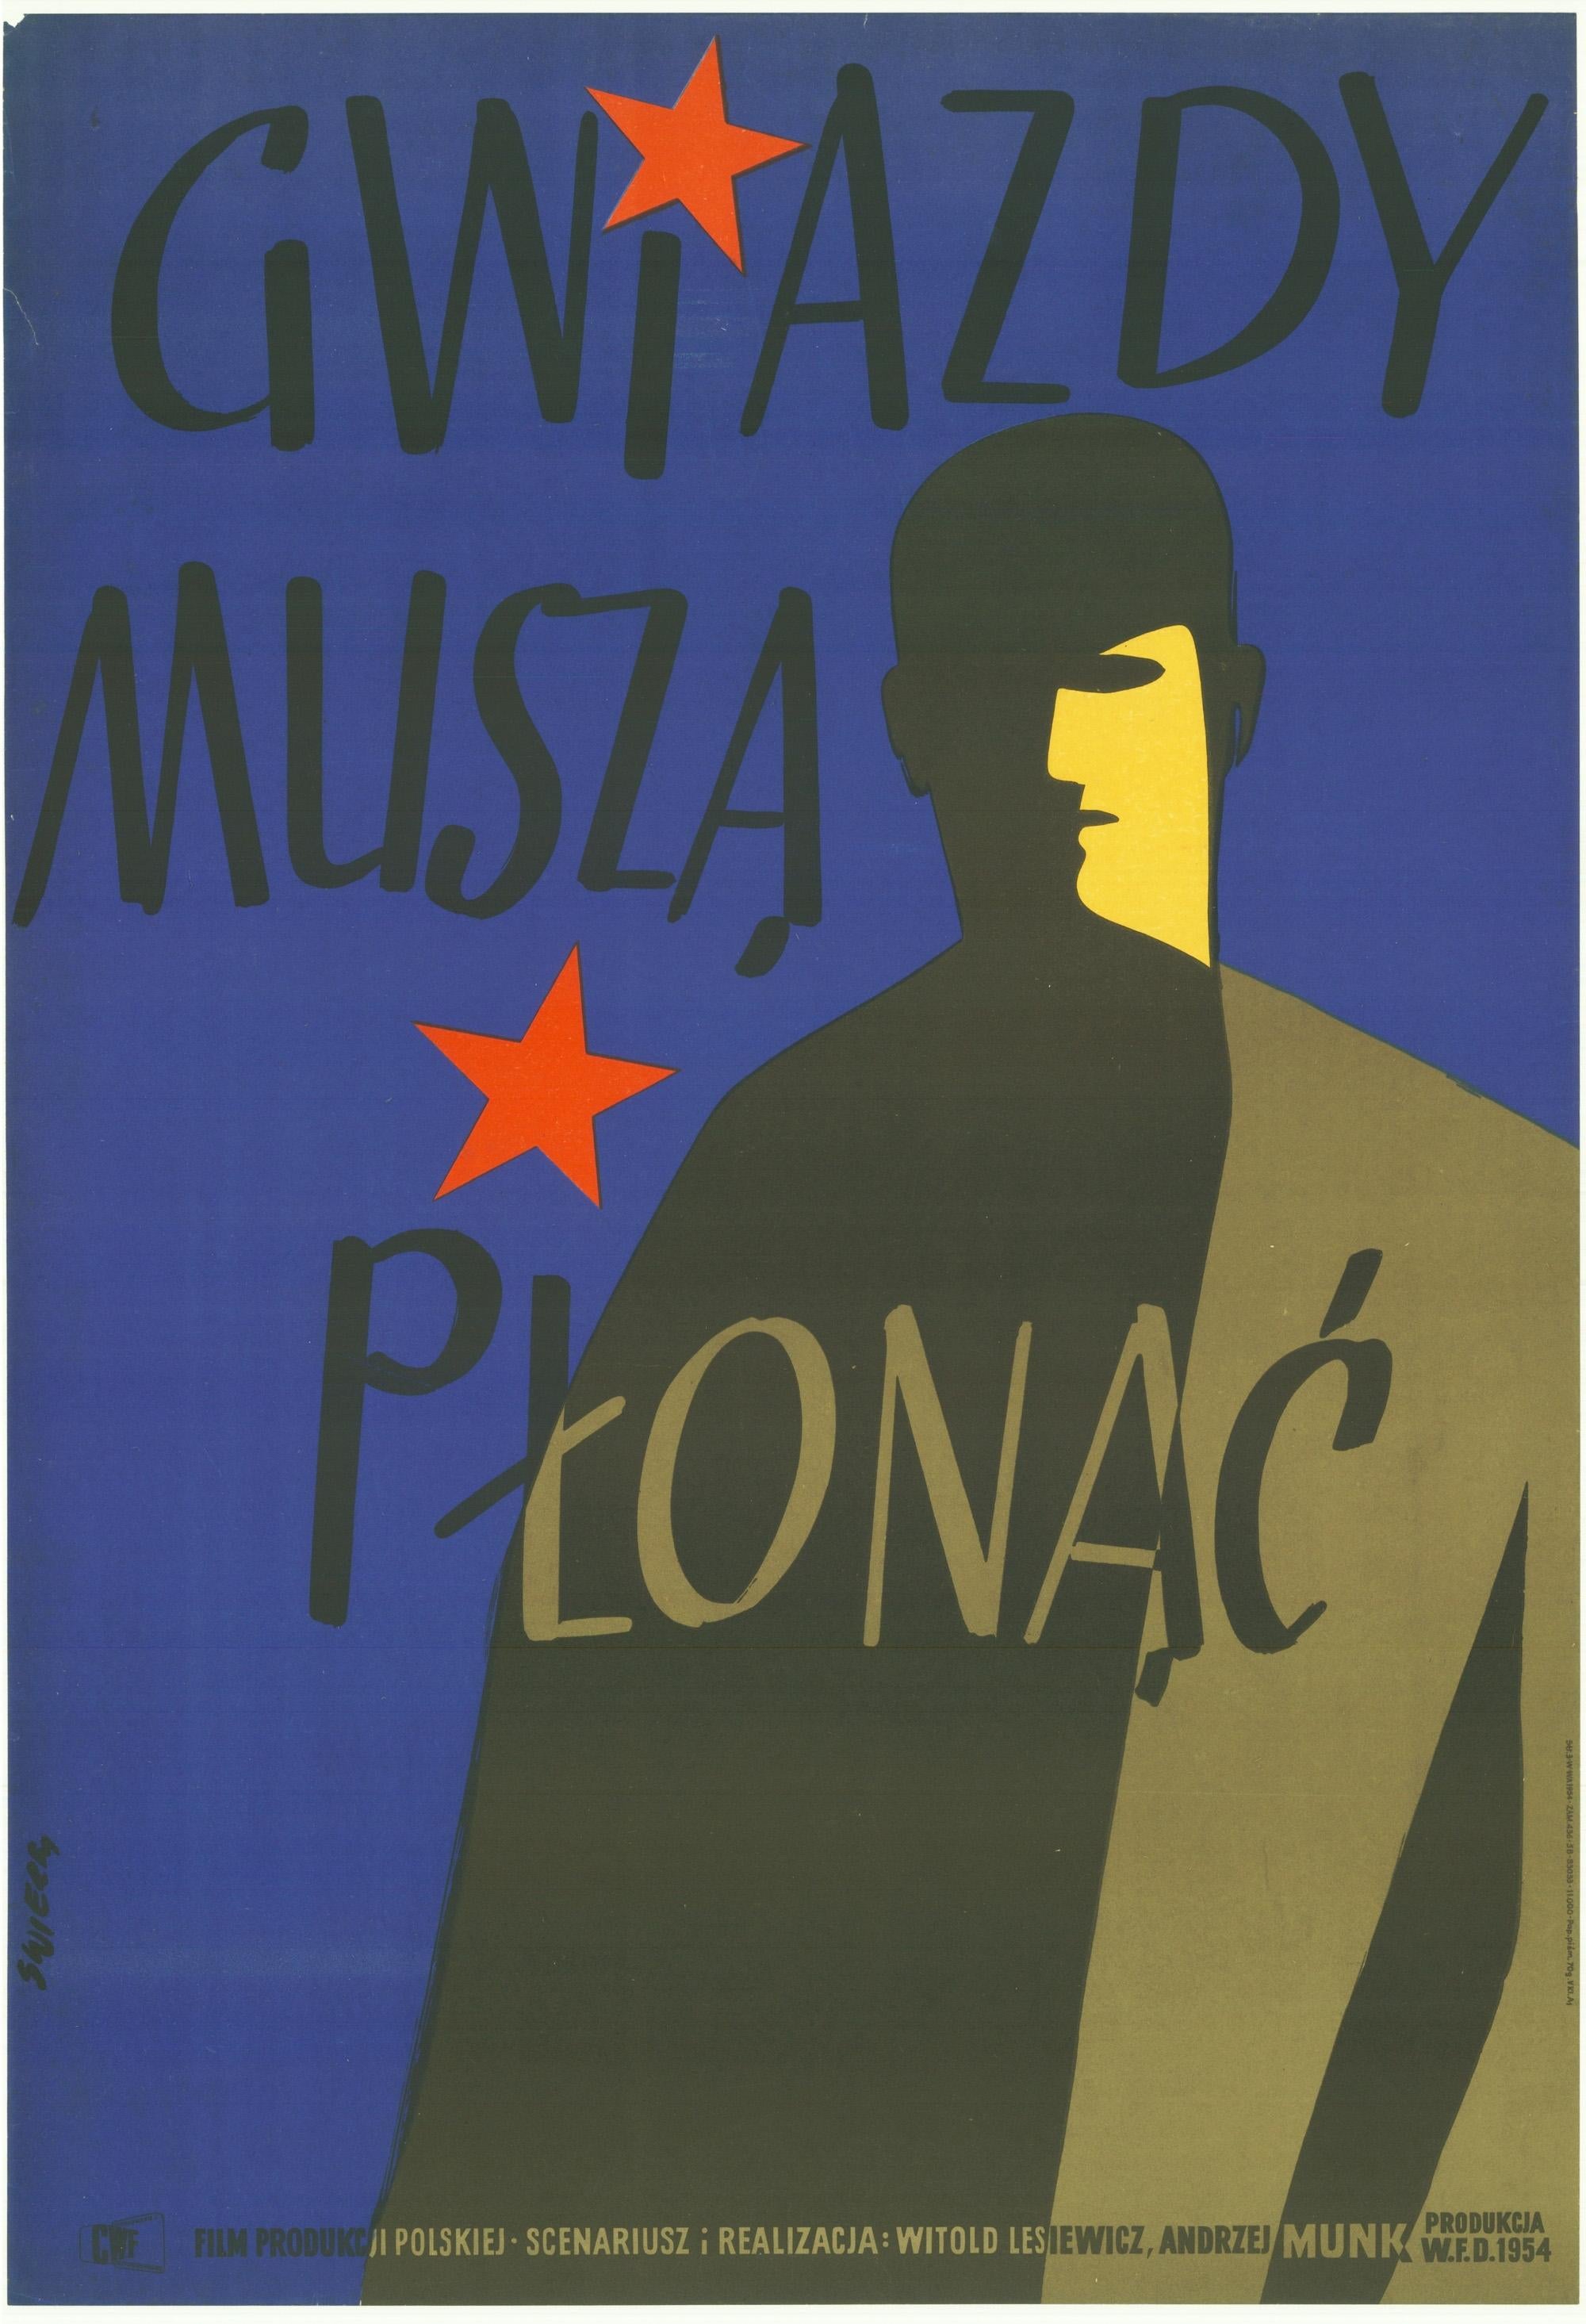 Mid-Century Modern Vintage Polish Gwiazdy Musza Plonac by Waldermar Swierzy, 1954 For Sale